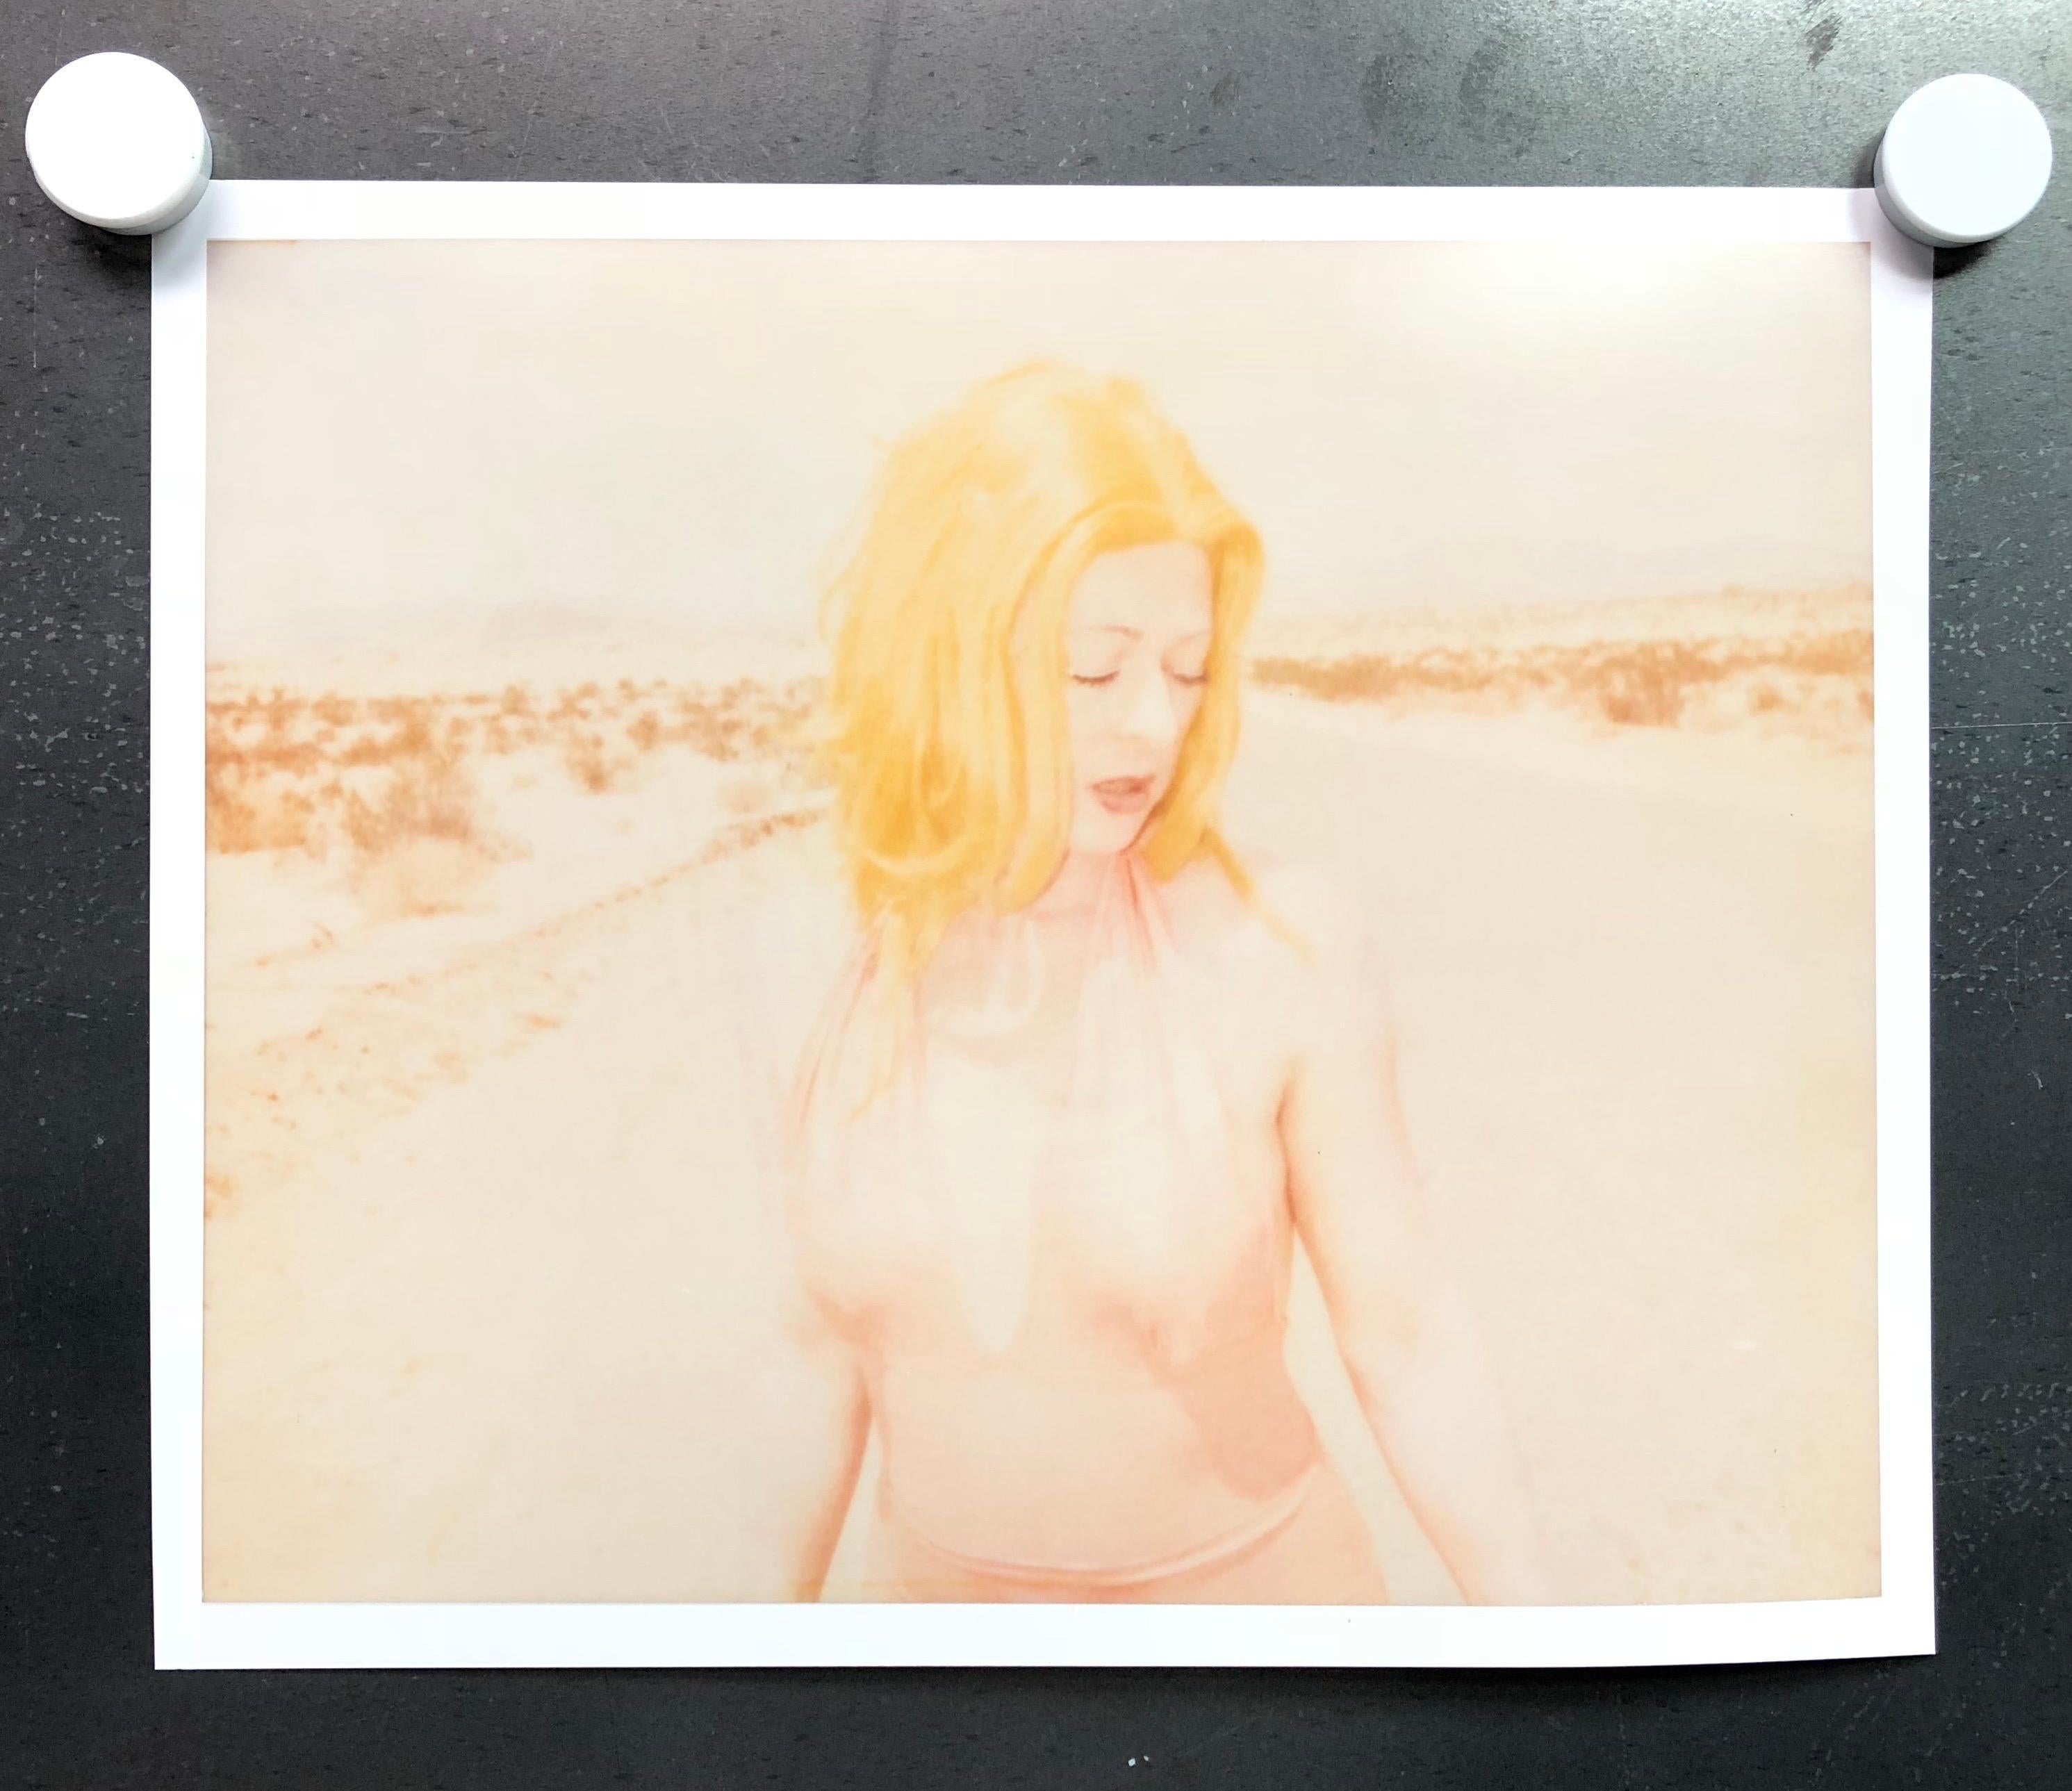 Stefanie Schneider Color Photograph - Max hitches into Town (29 Palms, CA)  Contemporary, Figurative, Polaroid, analog